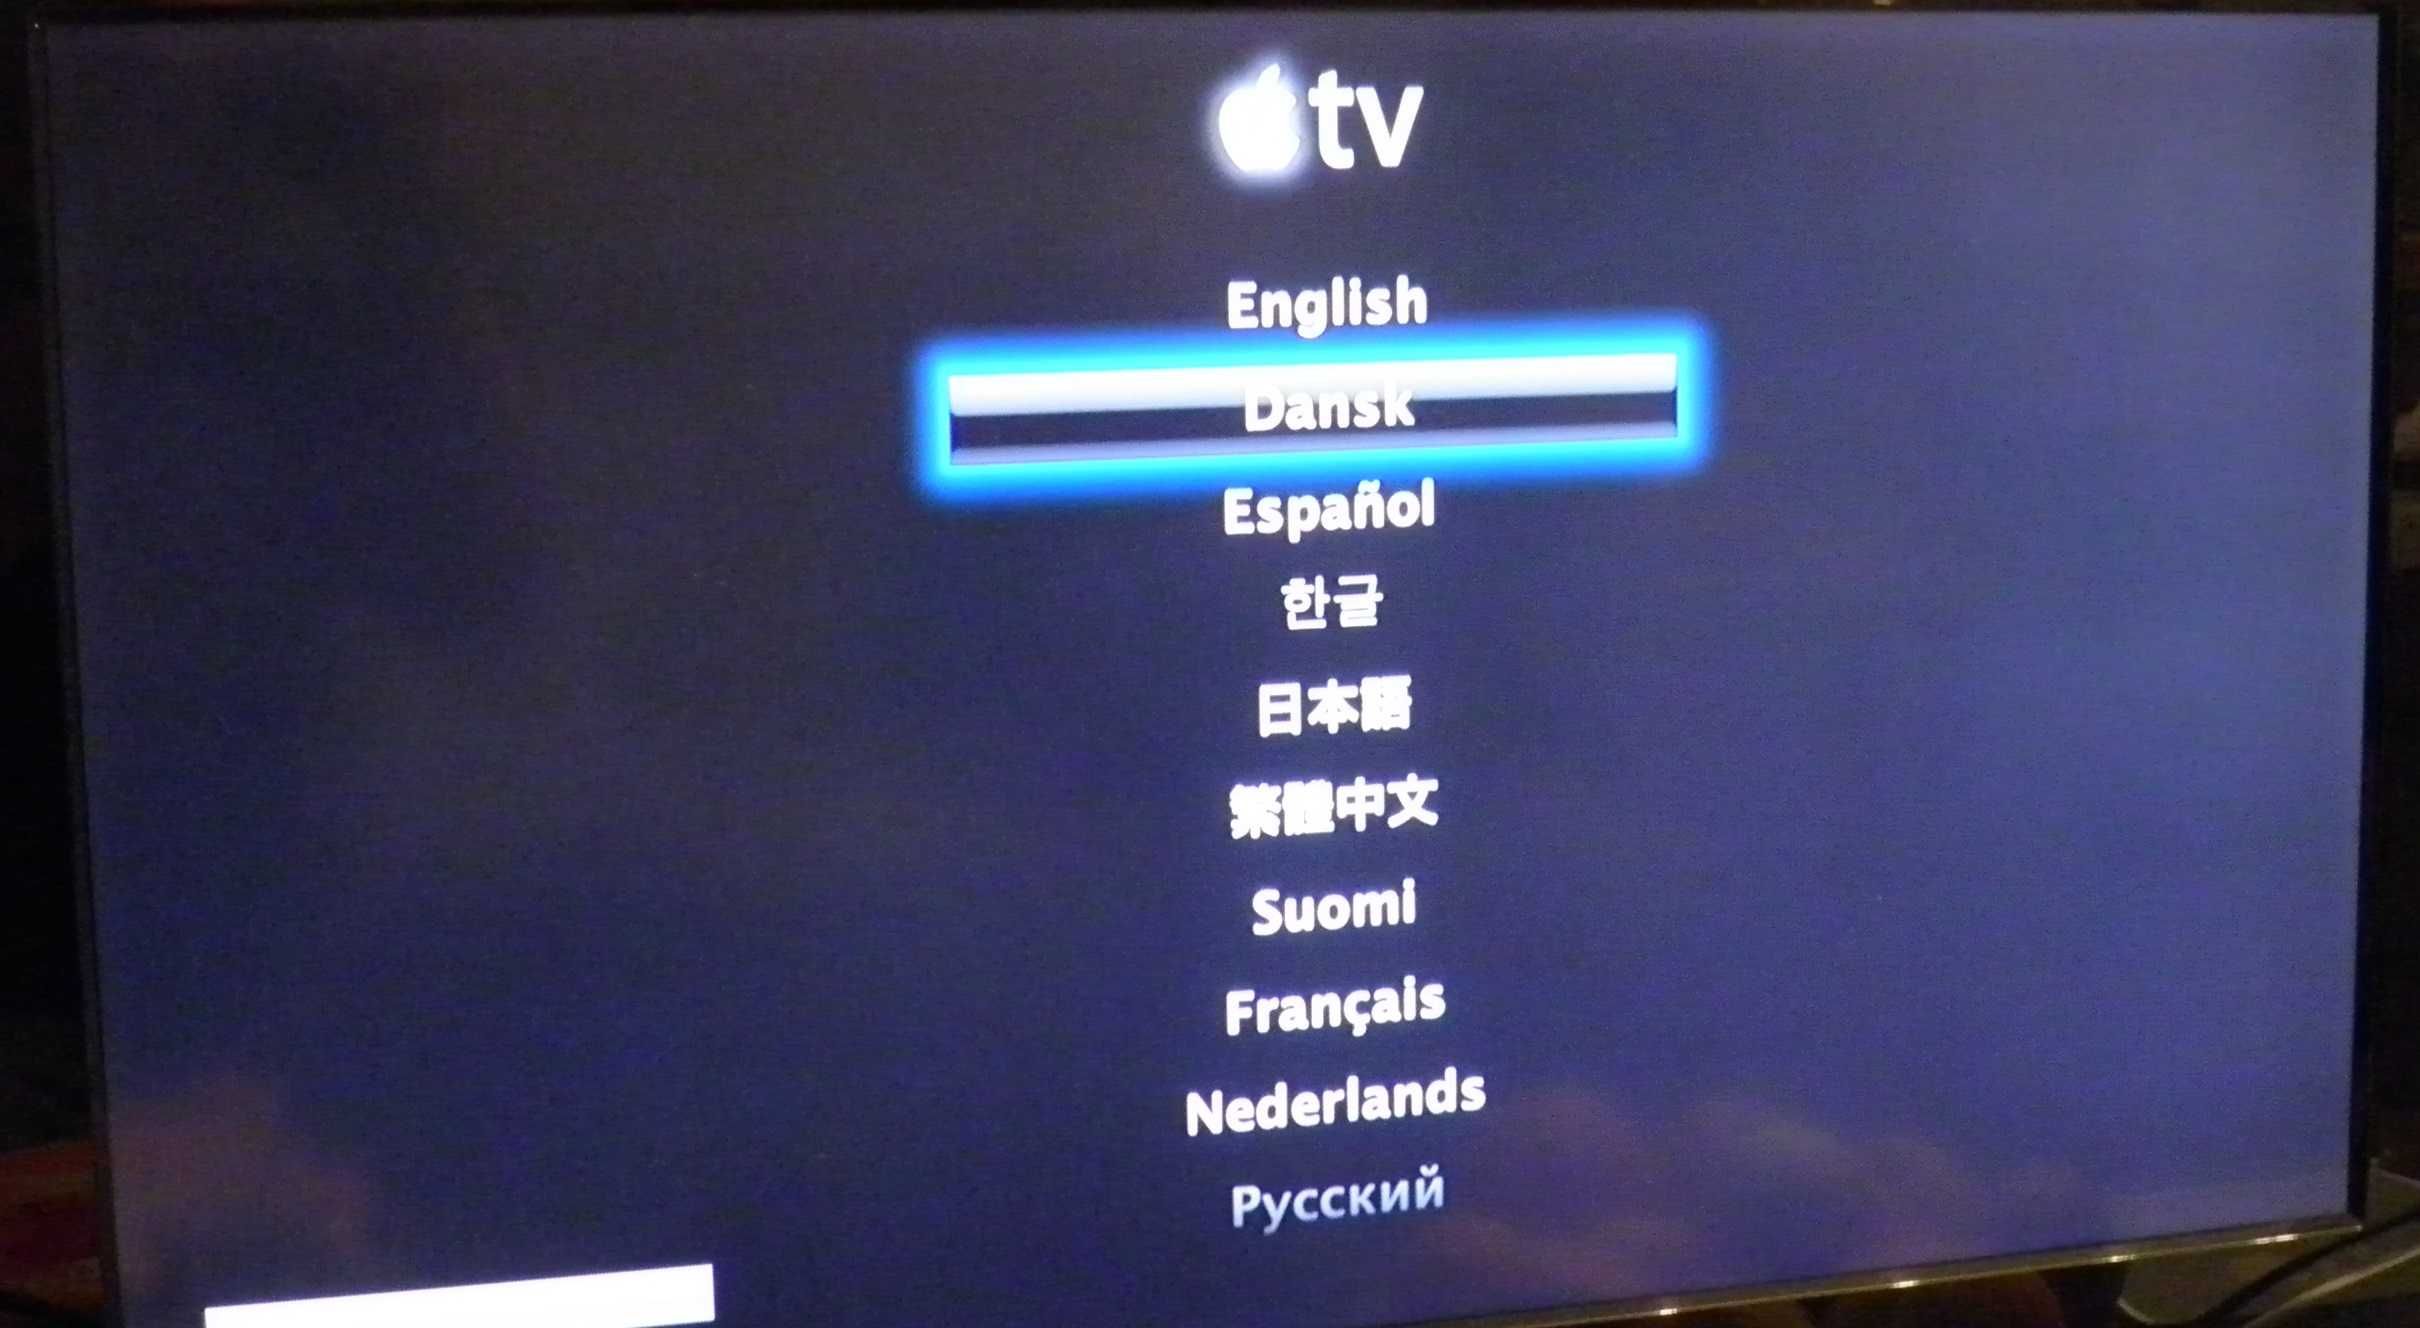 Apple TV 1 Gen 40 Gb A1218 (EMC 2123)